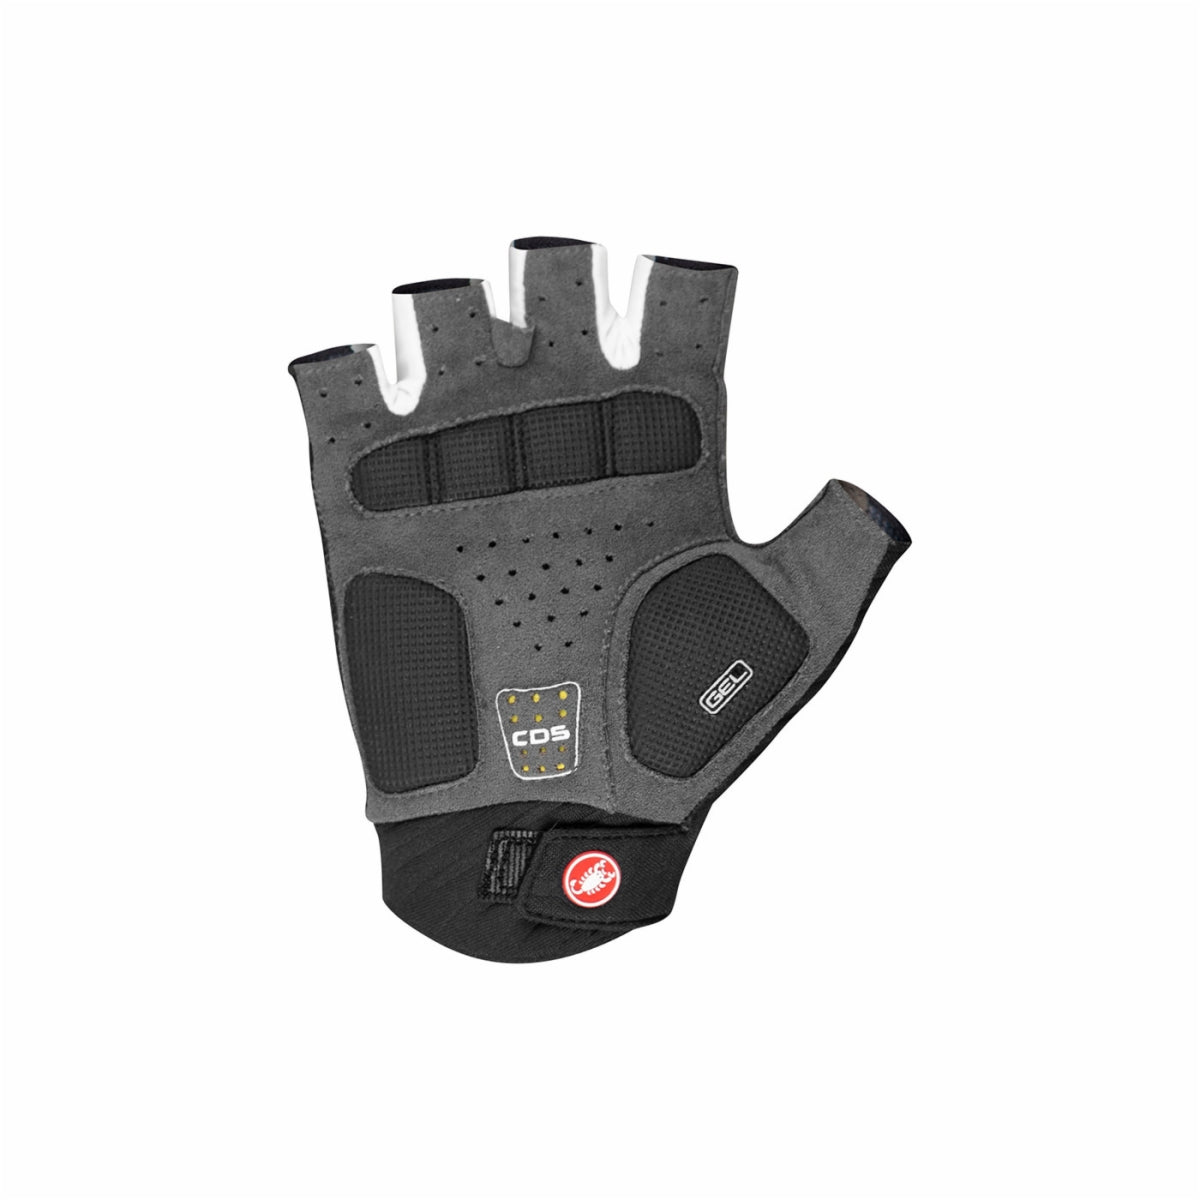 CASTELLI  Roubaix 2 Gel Woman's SF Cycling Glove  - Black